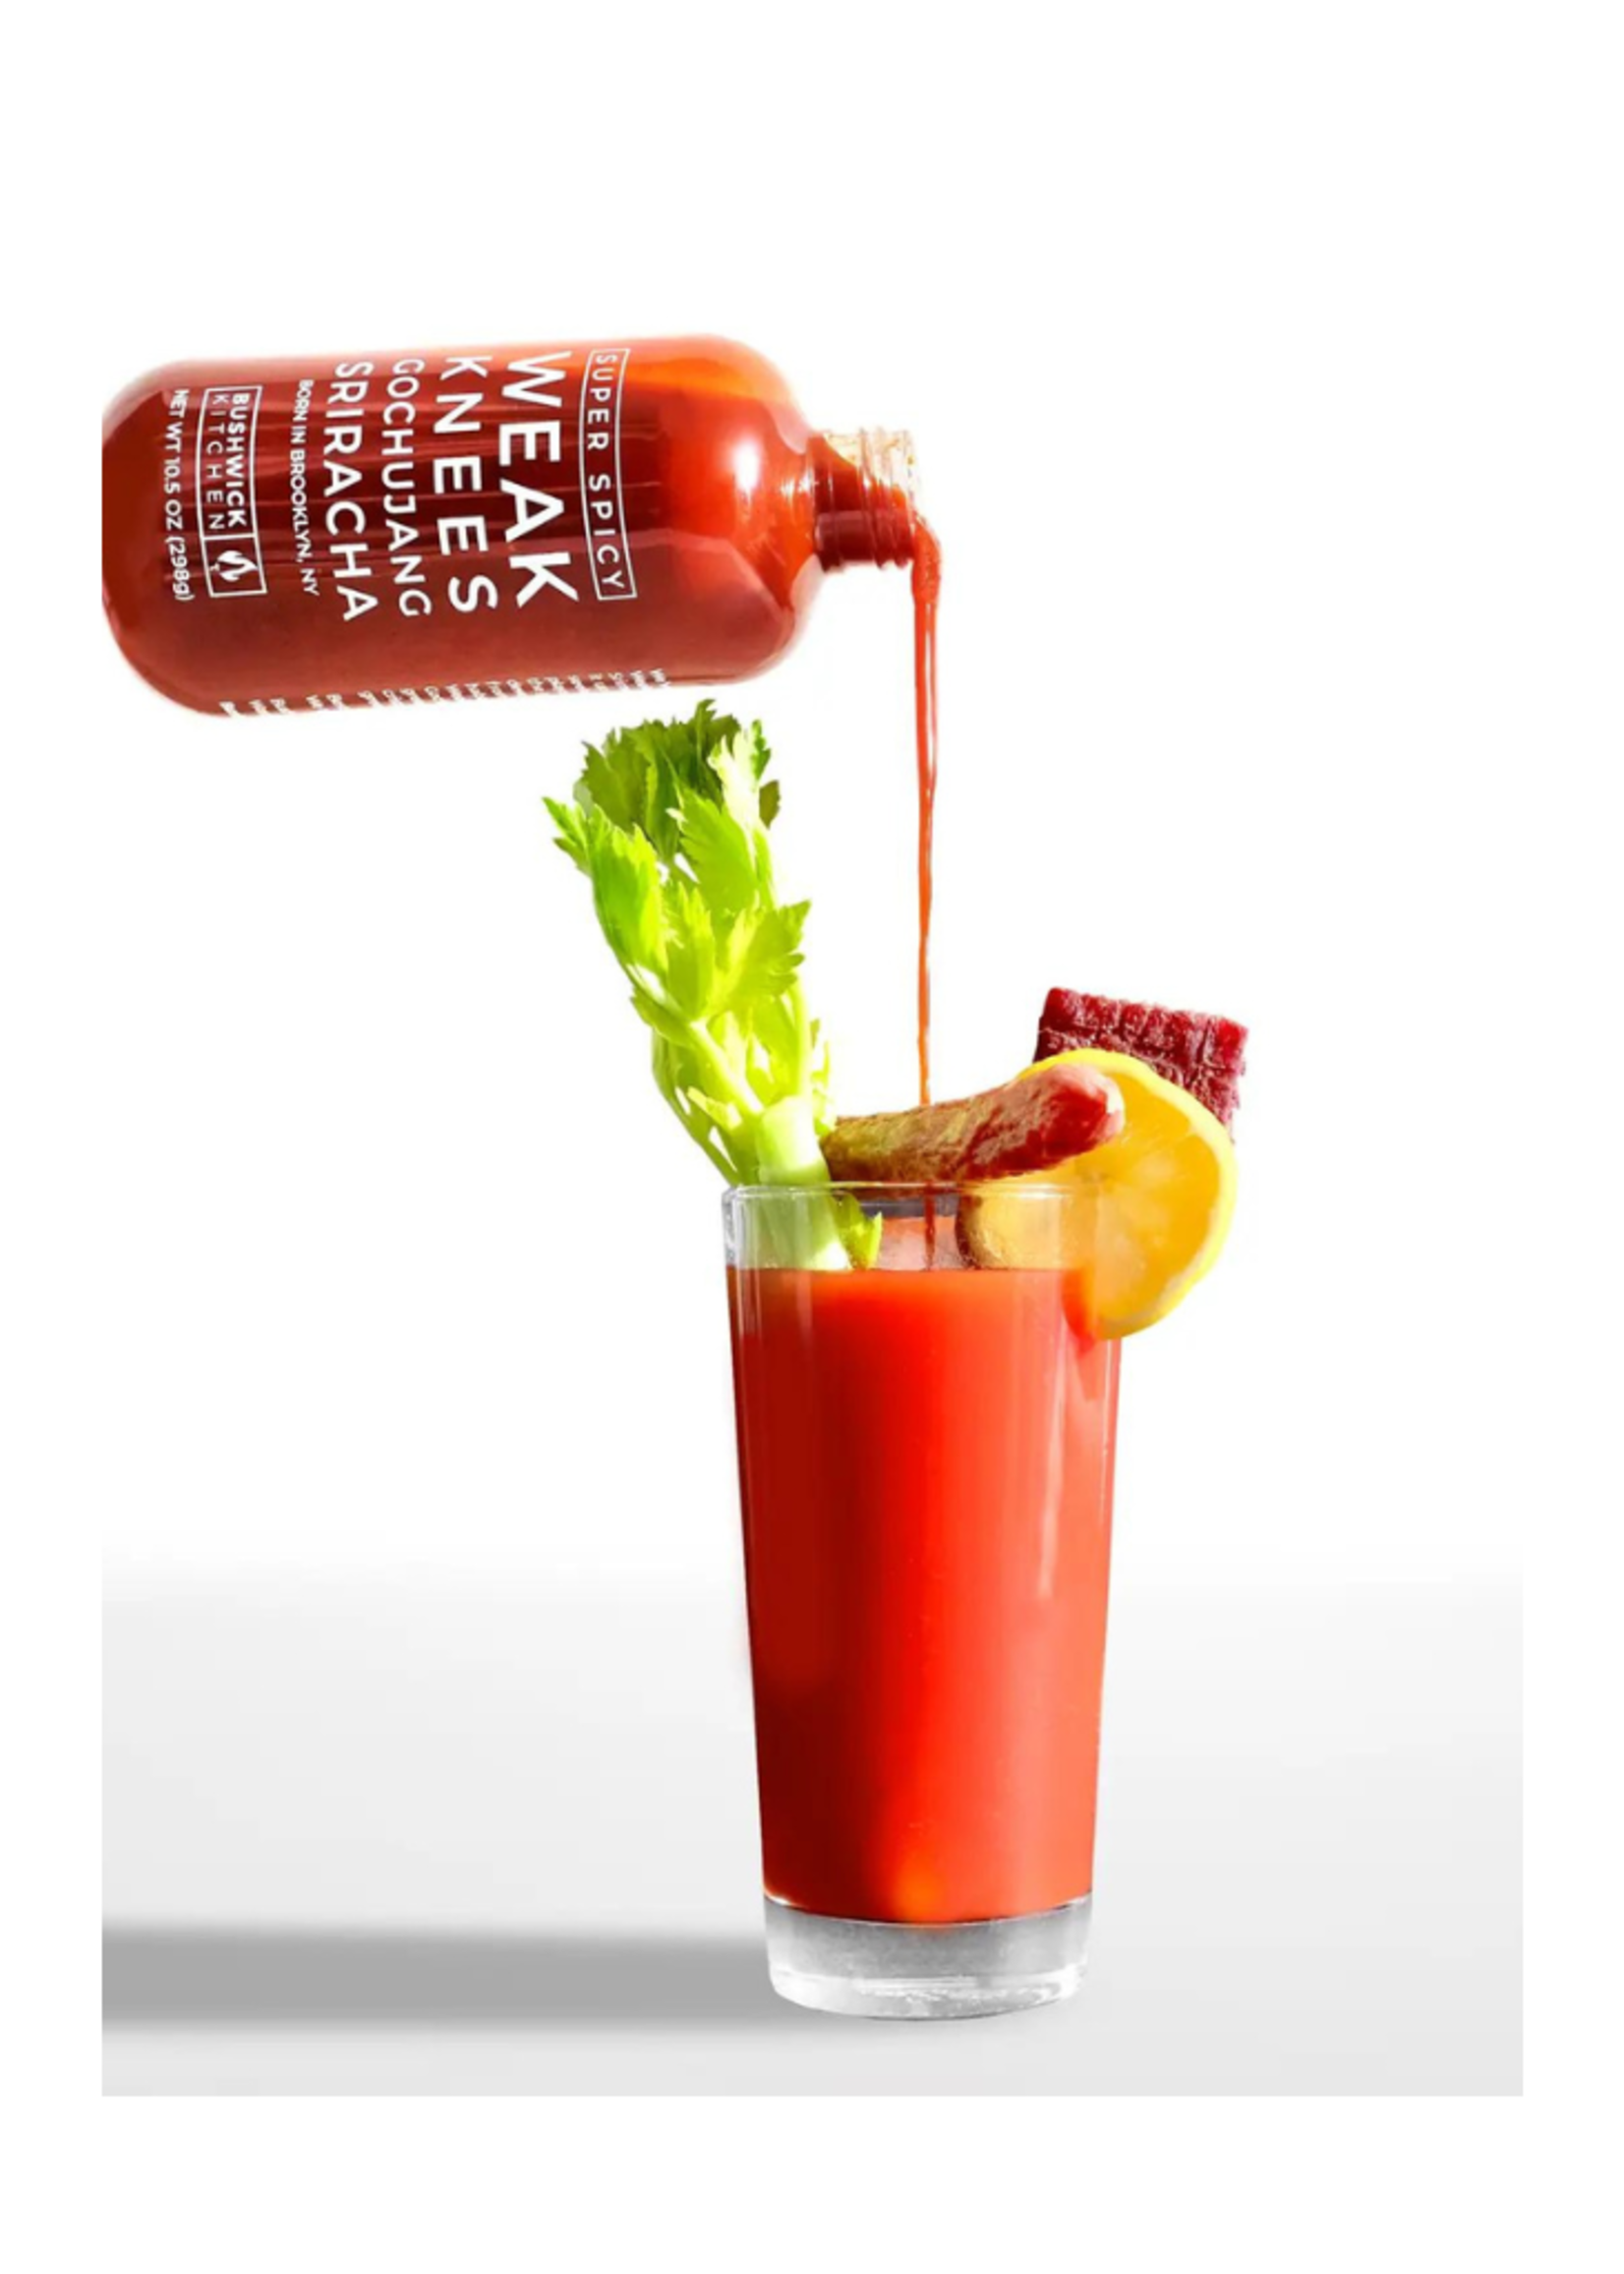 Bushwick Kitchen Bushwick Kitchen - Super Spicy Weak Knees Gochujang Sriracha